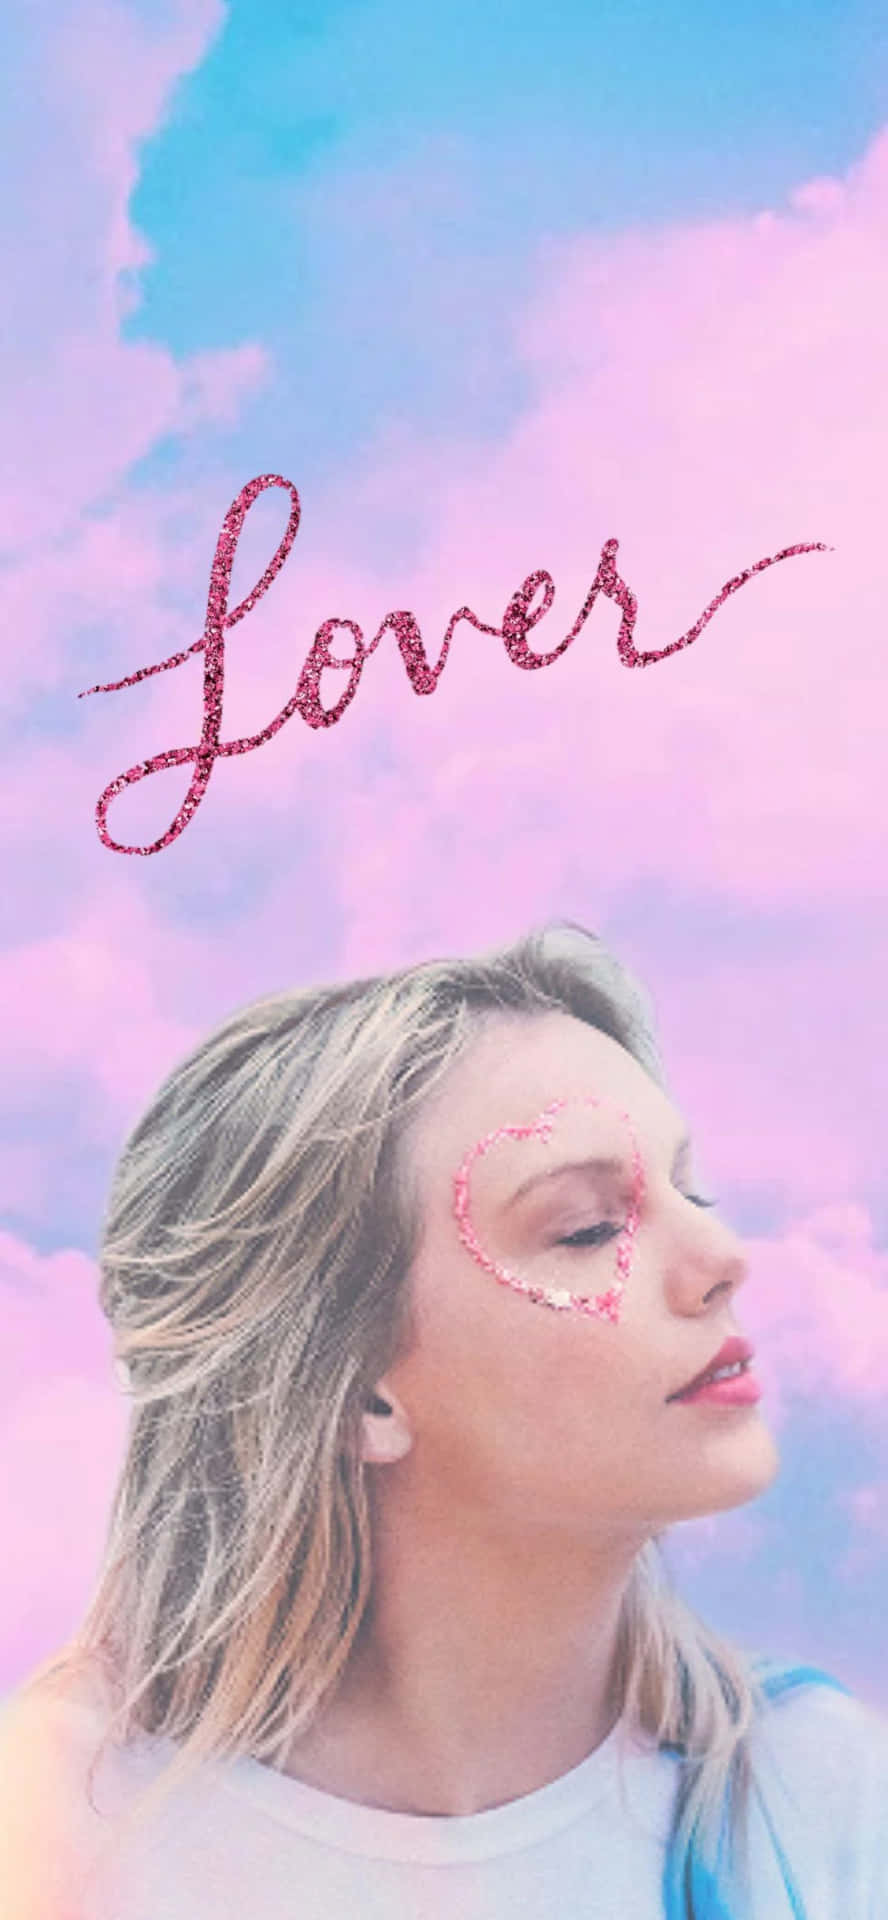 Taylor Swift Lover Inspired Portrait Wallpaper